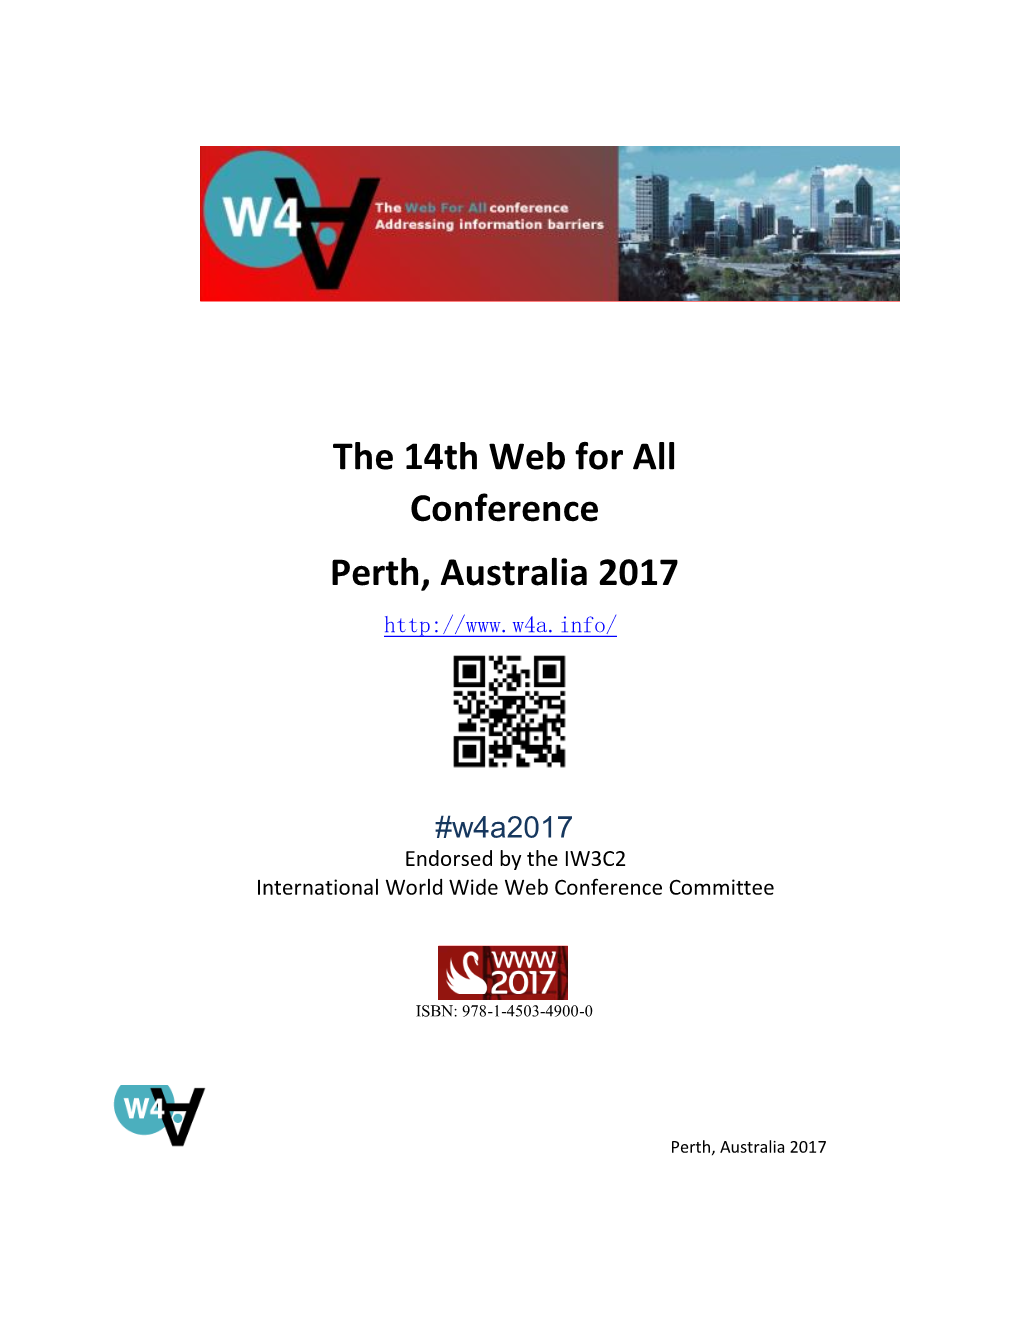 The 14Th Web for All Conference Perth, Australia 2017